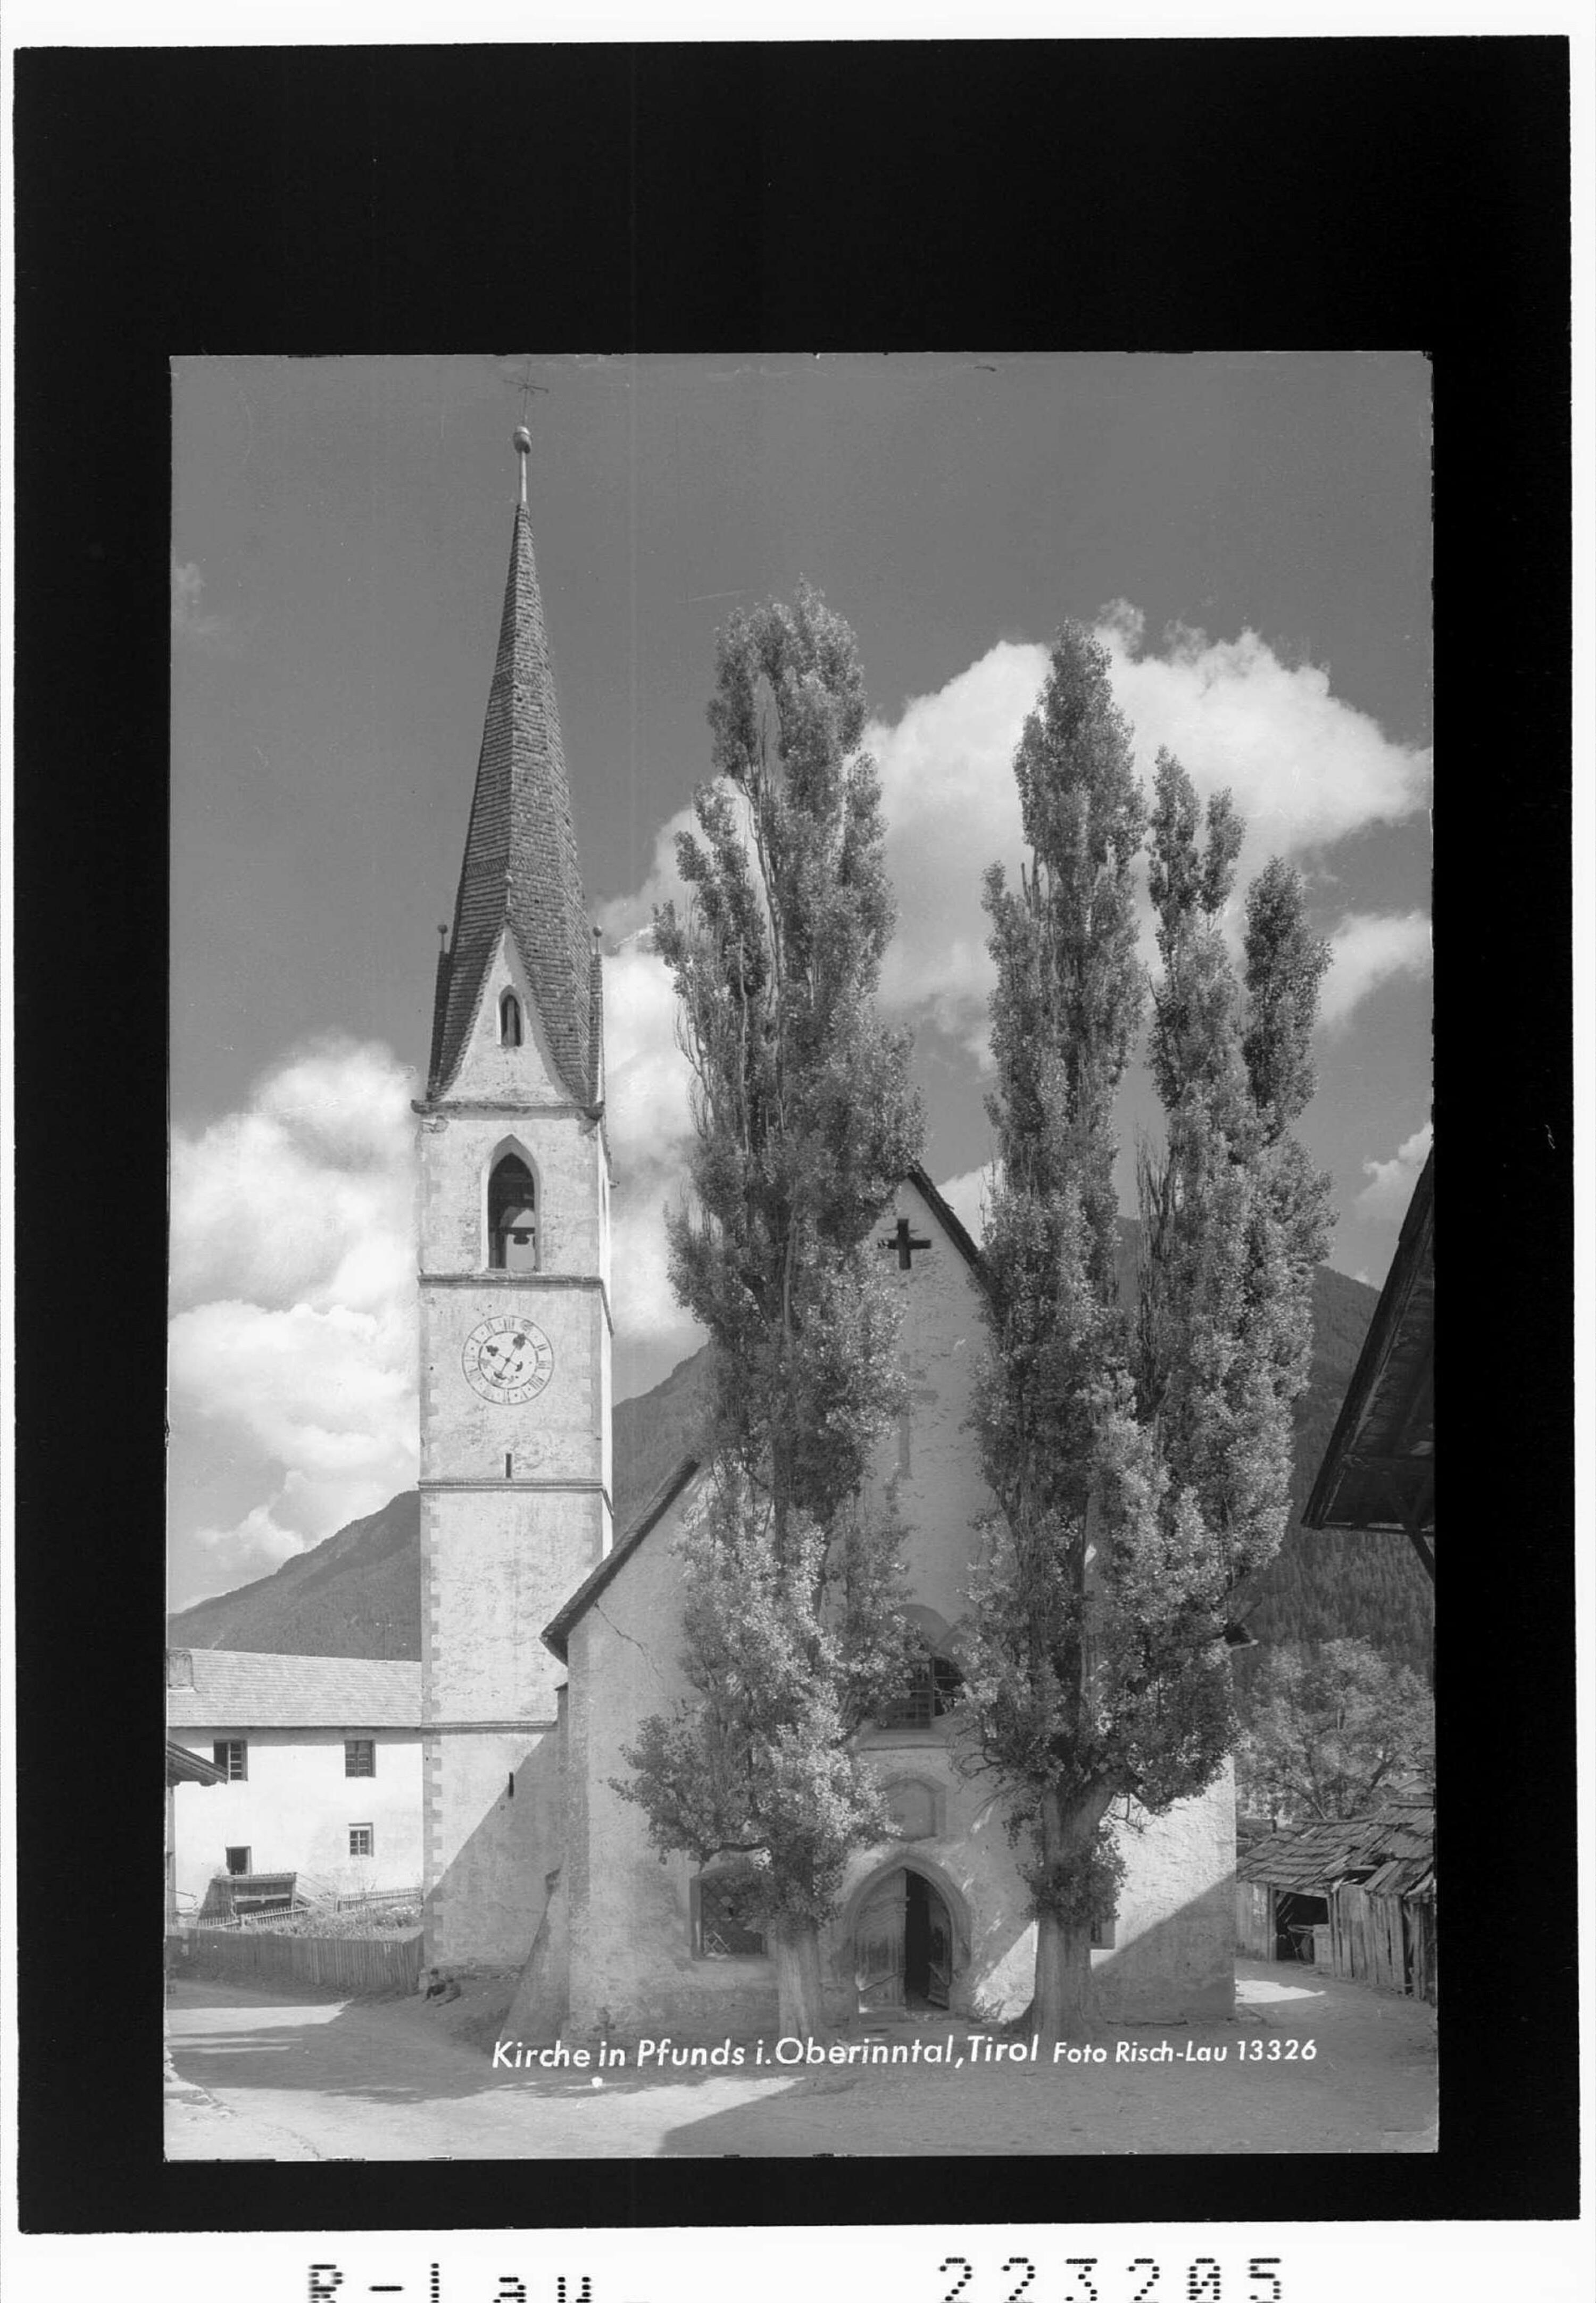 Kirche in Pfunds im Oberinntal / Tirol></div>


    <hr>
    <div class=